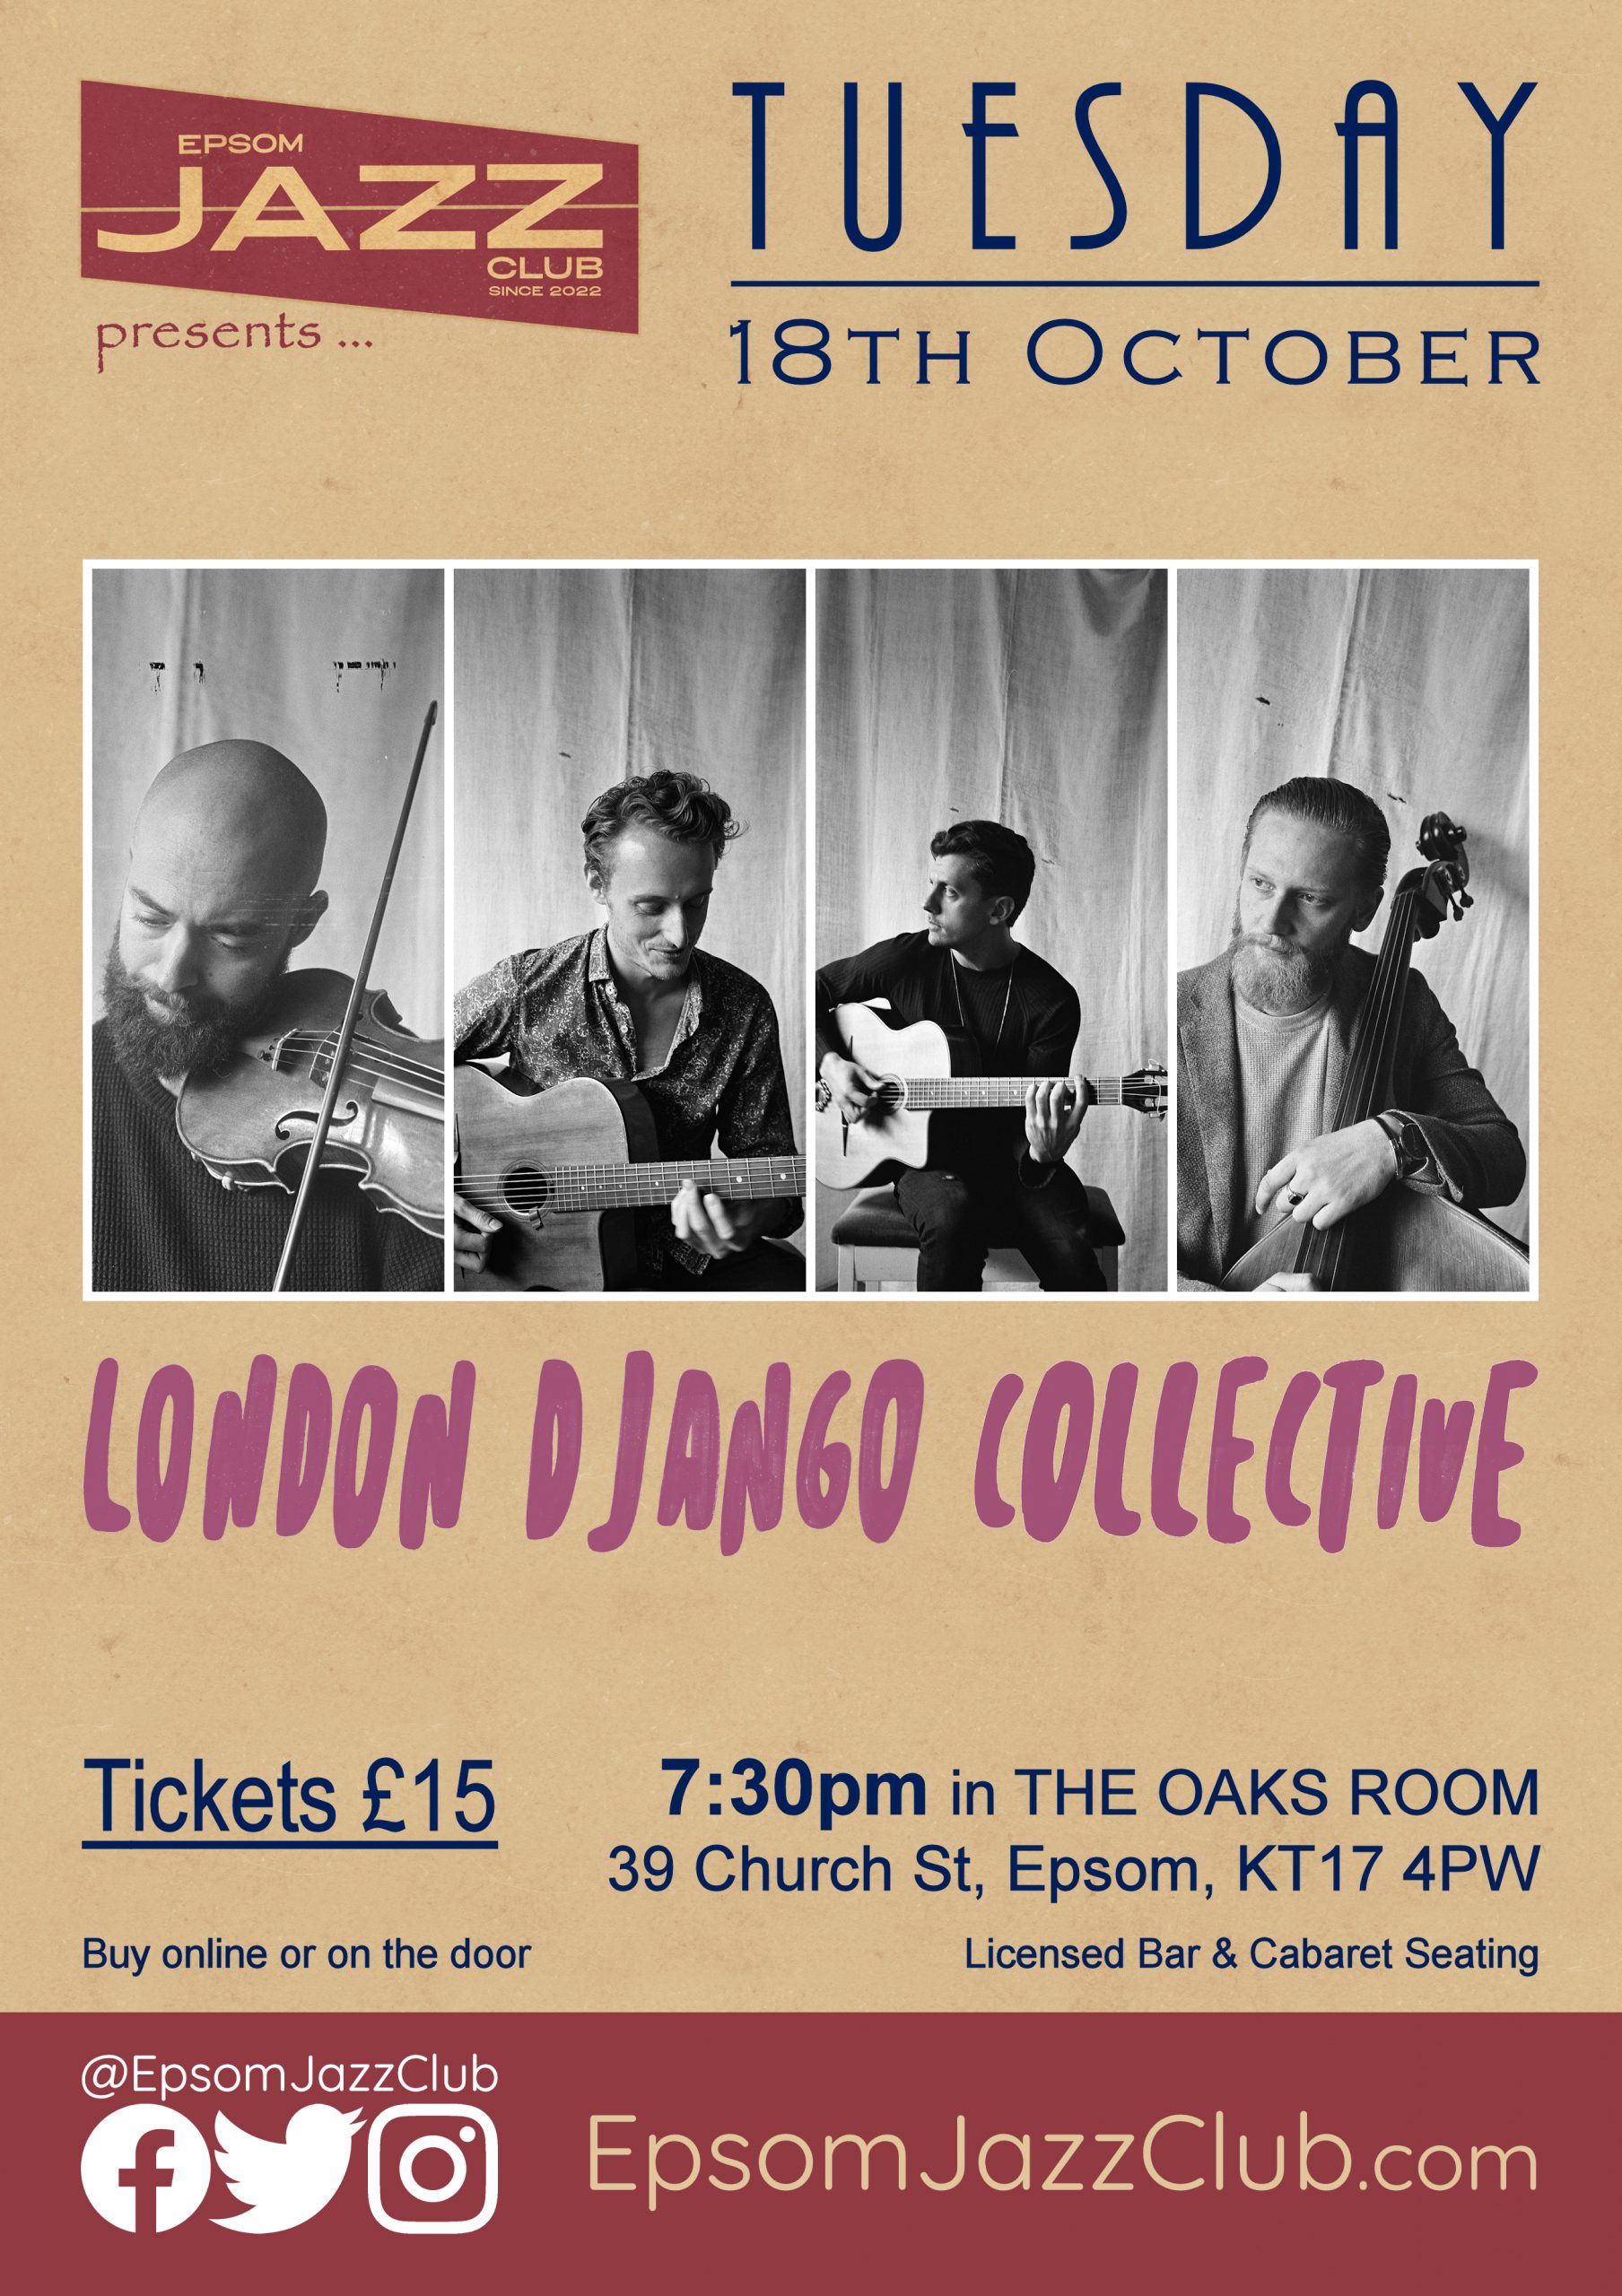 London Django Collective